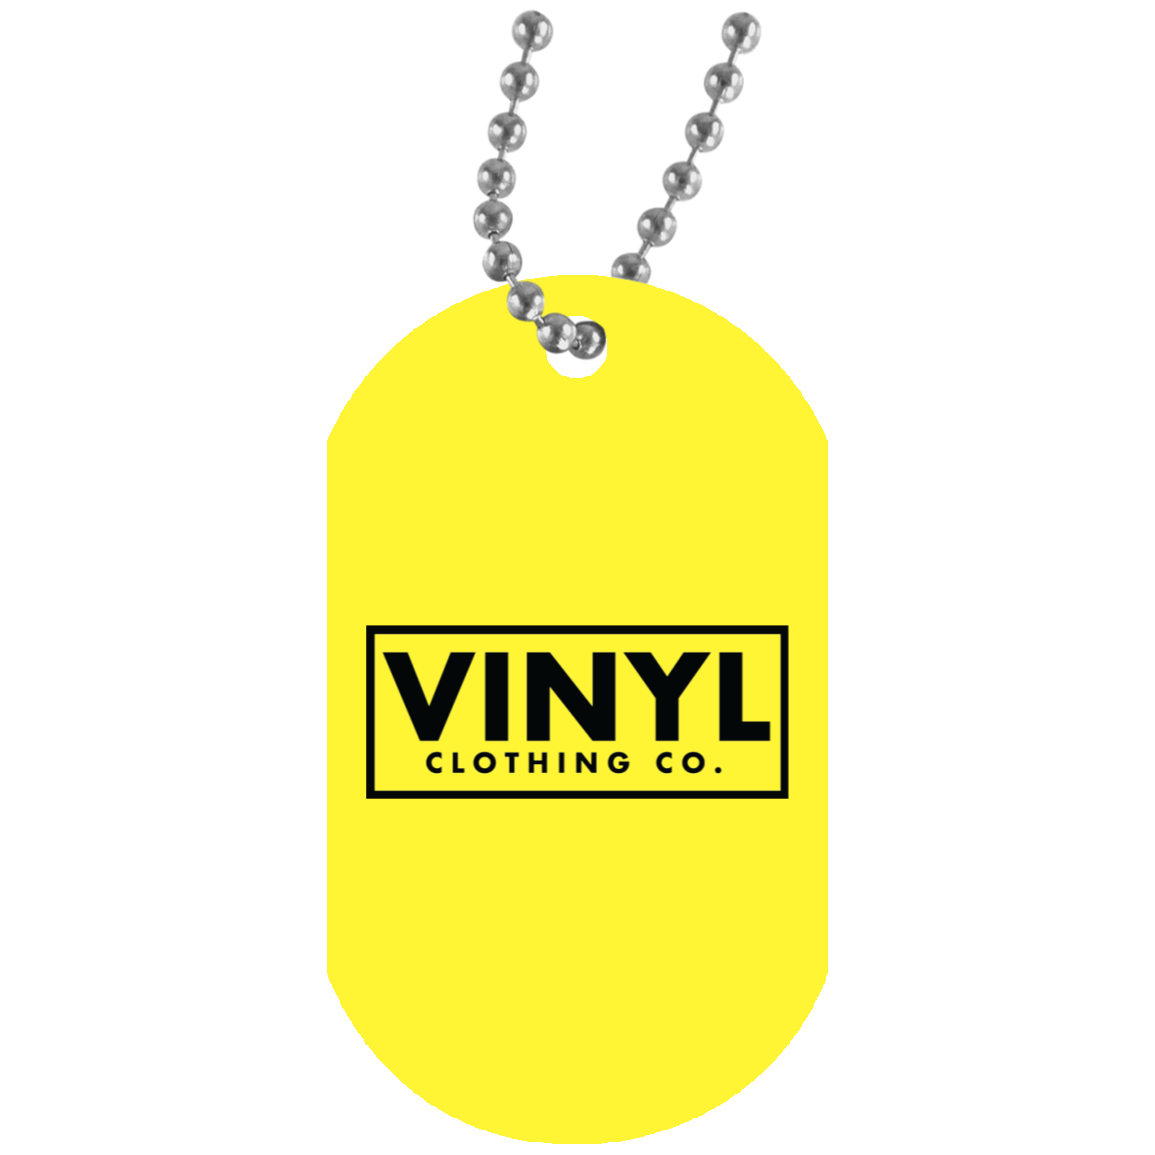 Vinyl Clothing Co. Dog Tag